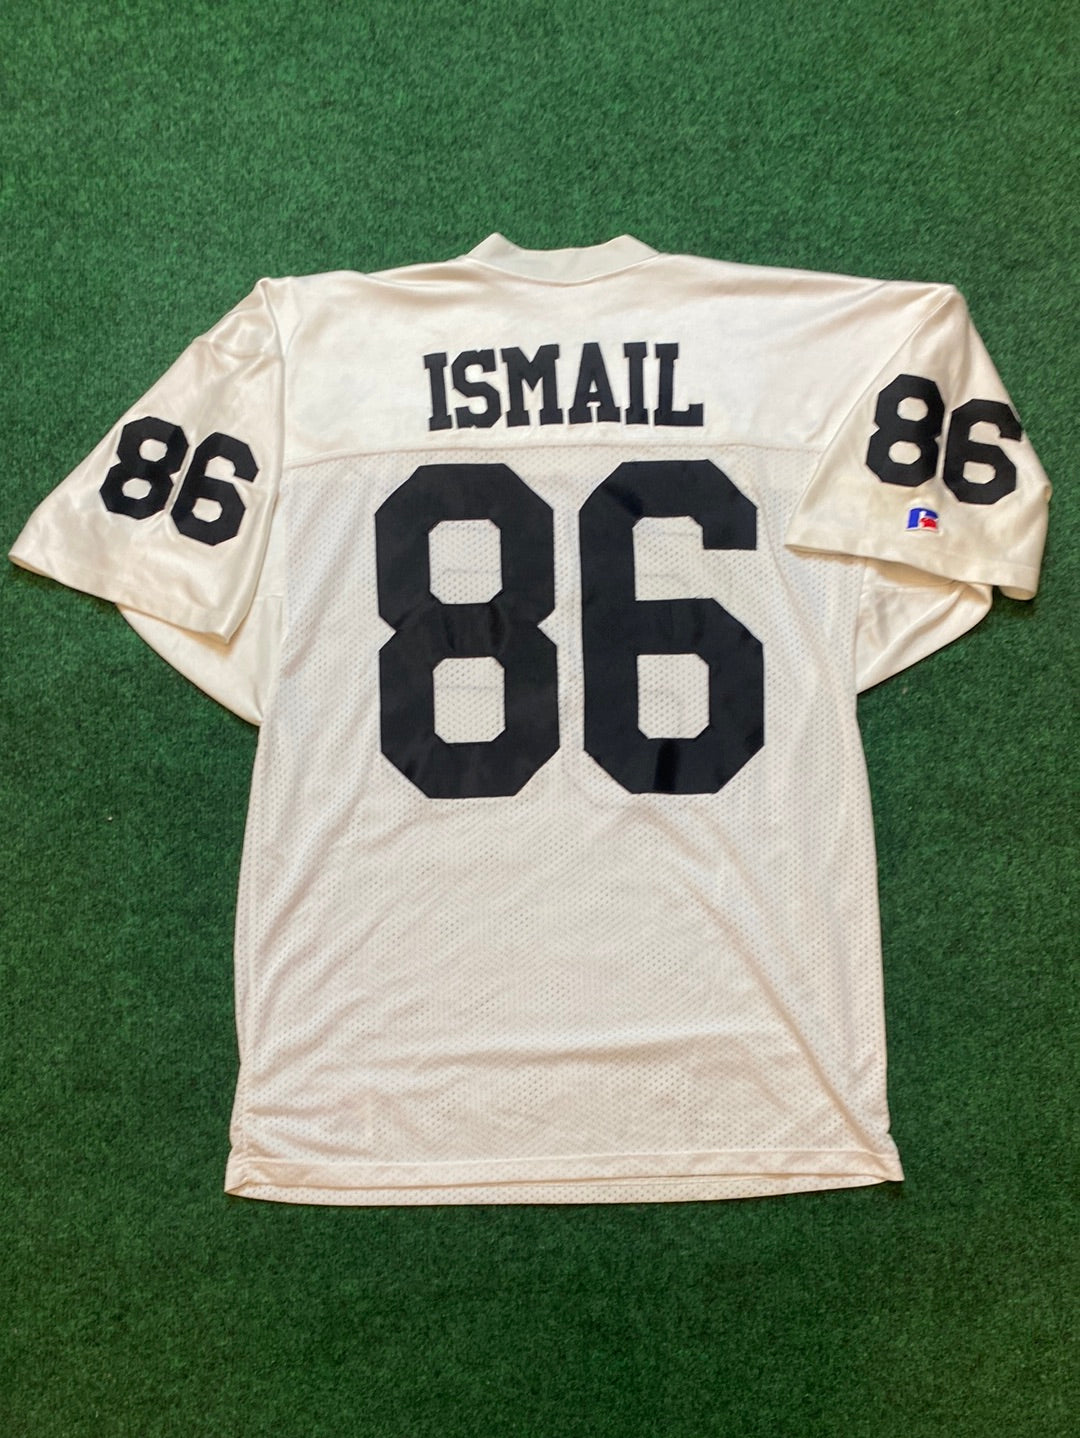 1994 Oakland Raiders Rocket Ismail NFL 75th Anniversary Jersey (48/XL)